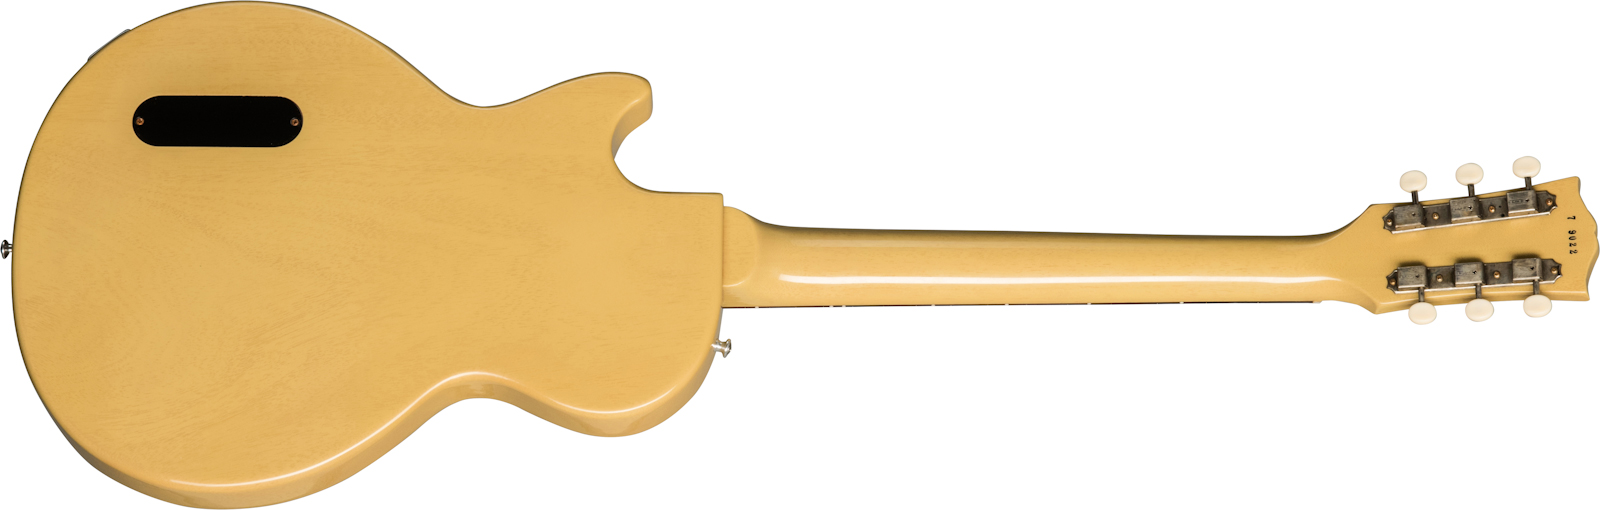 Gibson Custom Shop Les Paul Junior 1957 Single Cut Reissue P90 Ht Rw - Vos Tv Yellow - Enkel gesneden elektrische gitaar - Variation 1